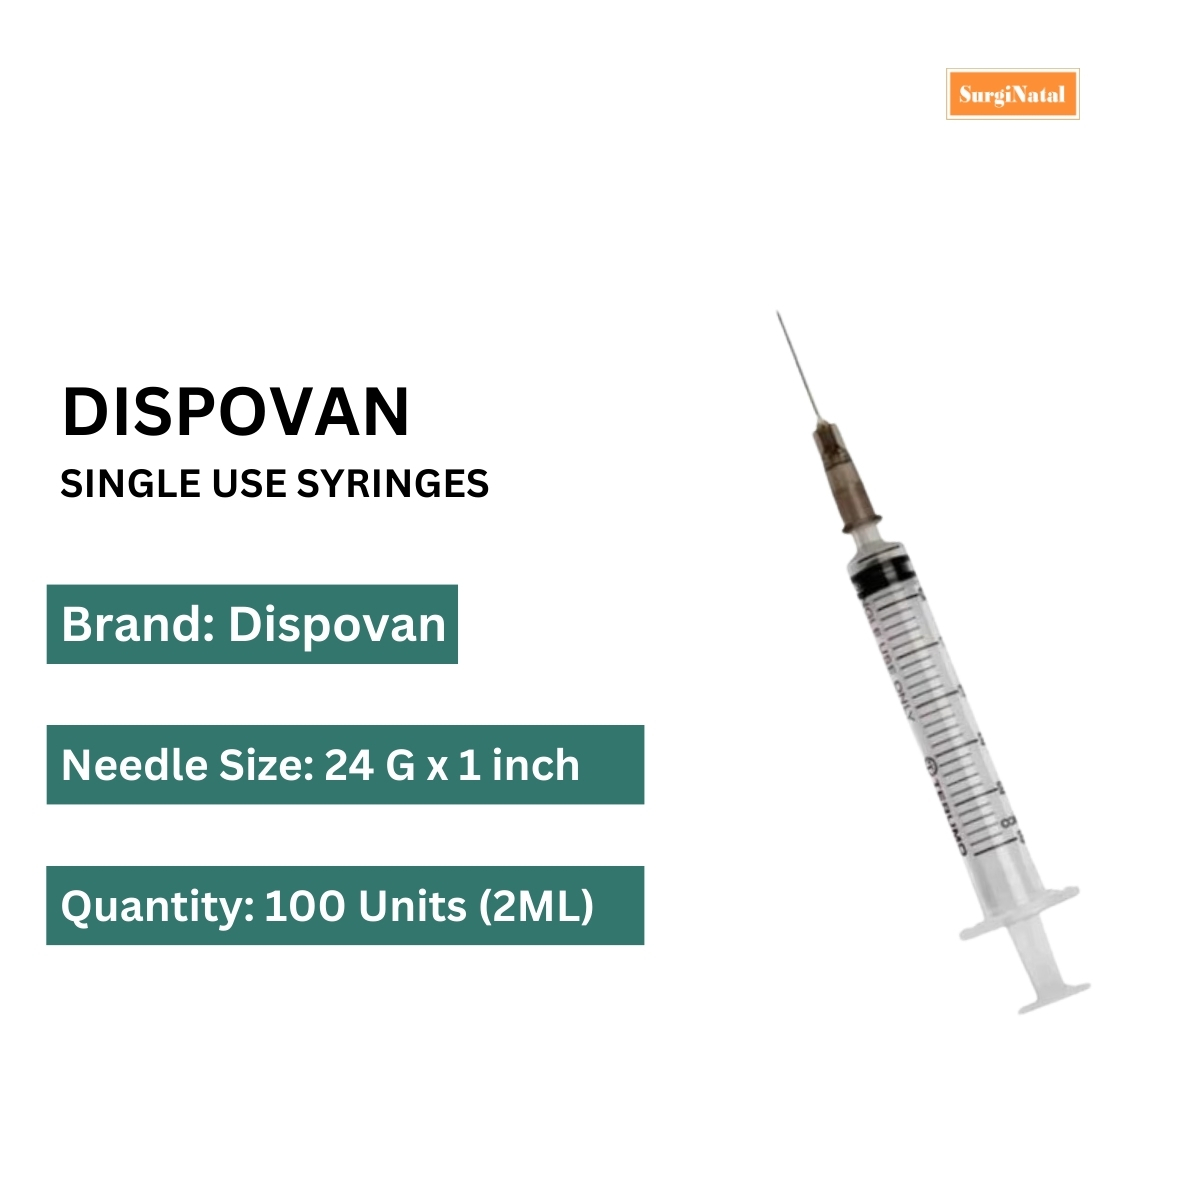 dispo van 2ml syringe with needle- 100 units pack